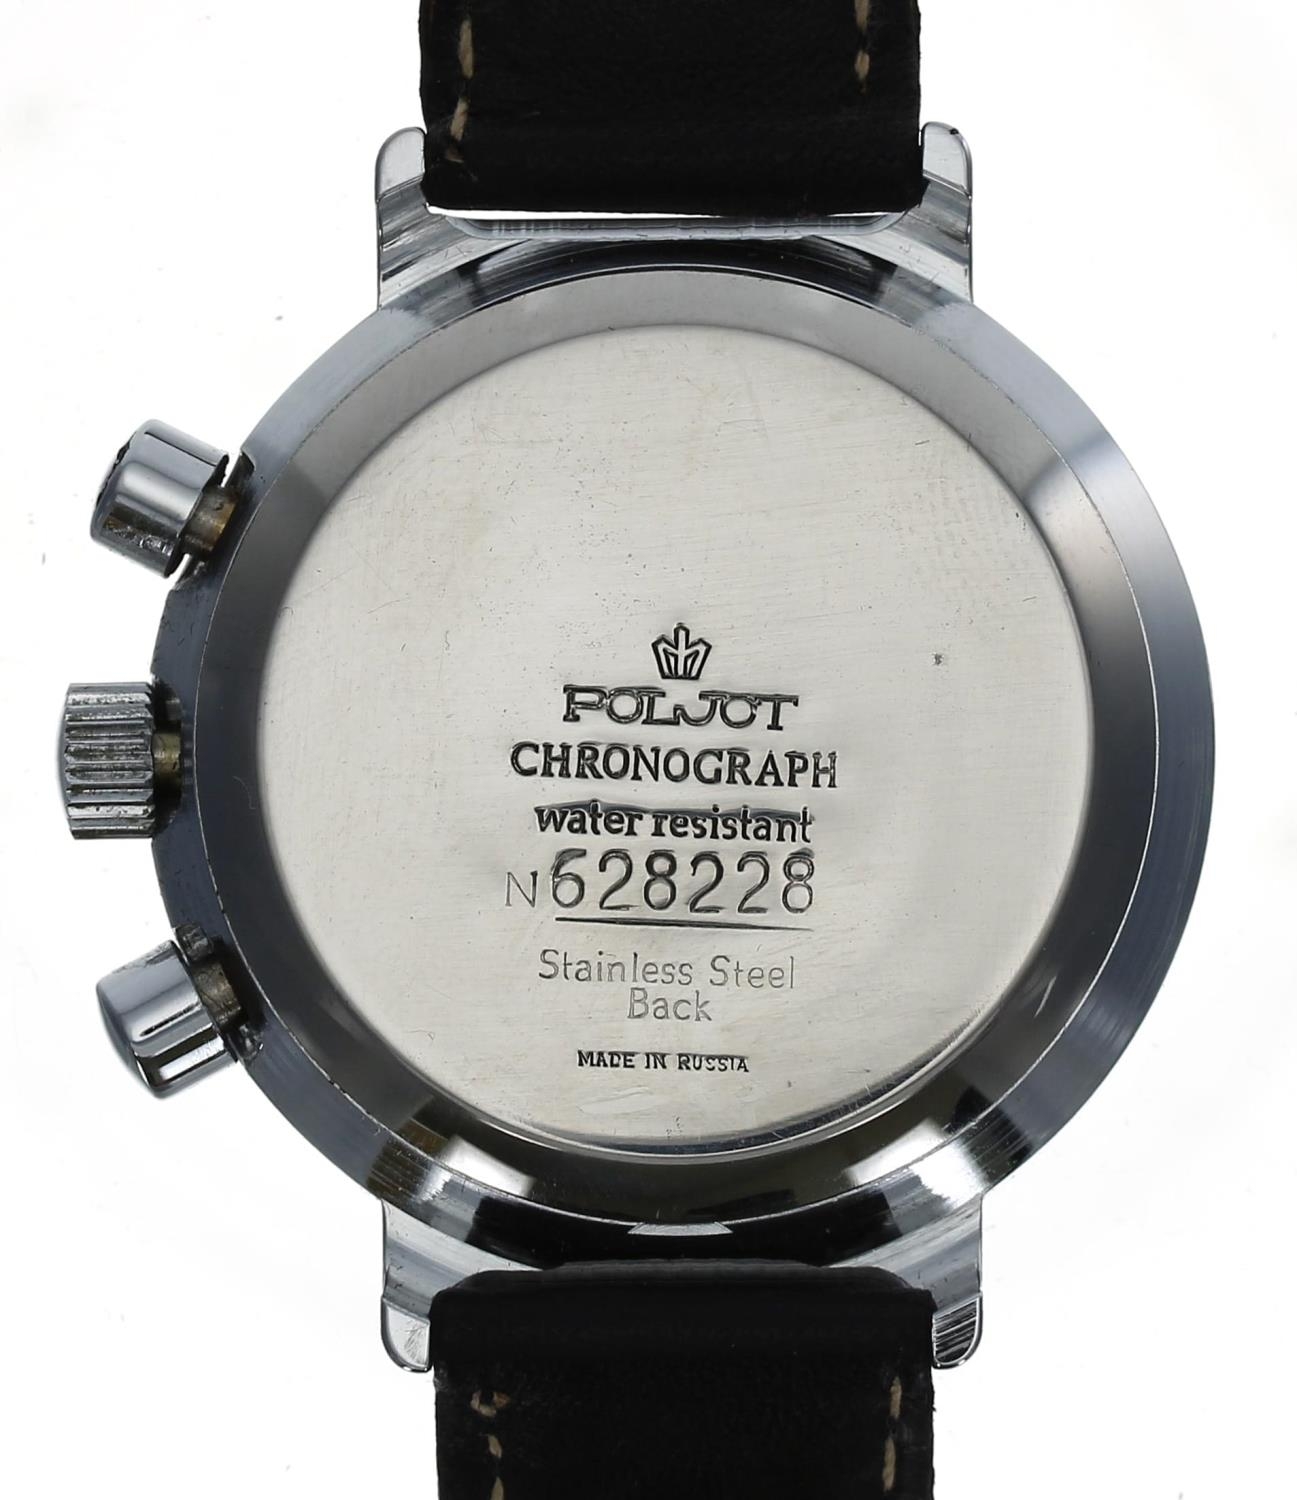 Poljot chronograph nickel/chrome and stainless steel gentleman's wristwatch, case no. 628xxx, - Image 2 of 2